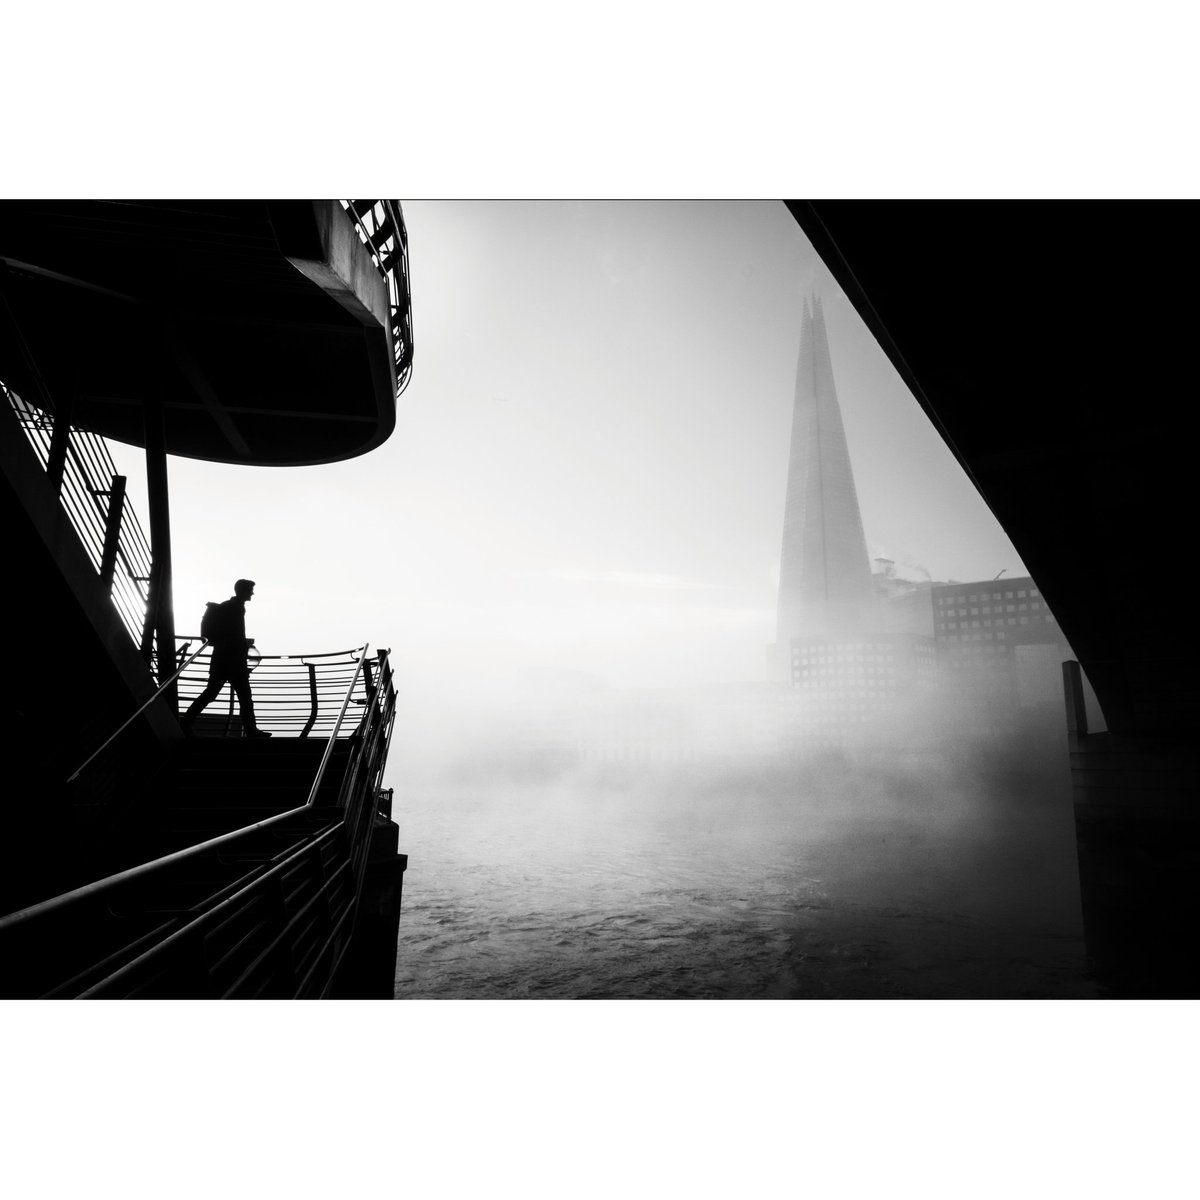 London in fog 2023.
#london #fujifilmuk #fineartphotography #streetphotography #streets_storytelling #lensculturestreets #storyofthestreet #streetphotographyhub #streetmagazine #londonstreets #streetlife #noirstreetlife